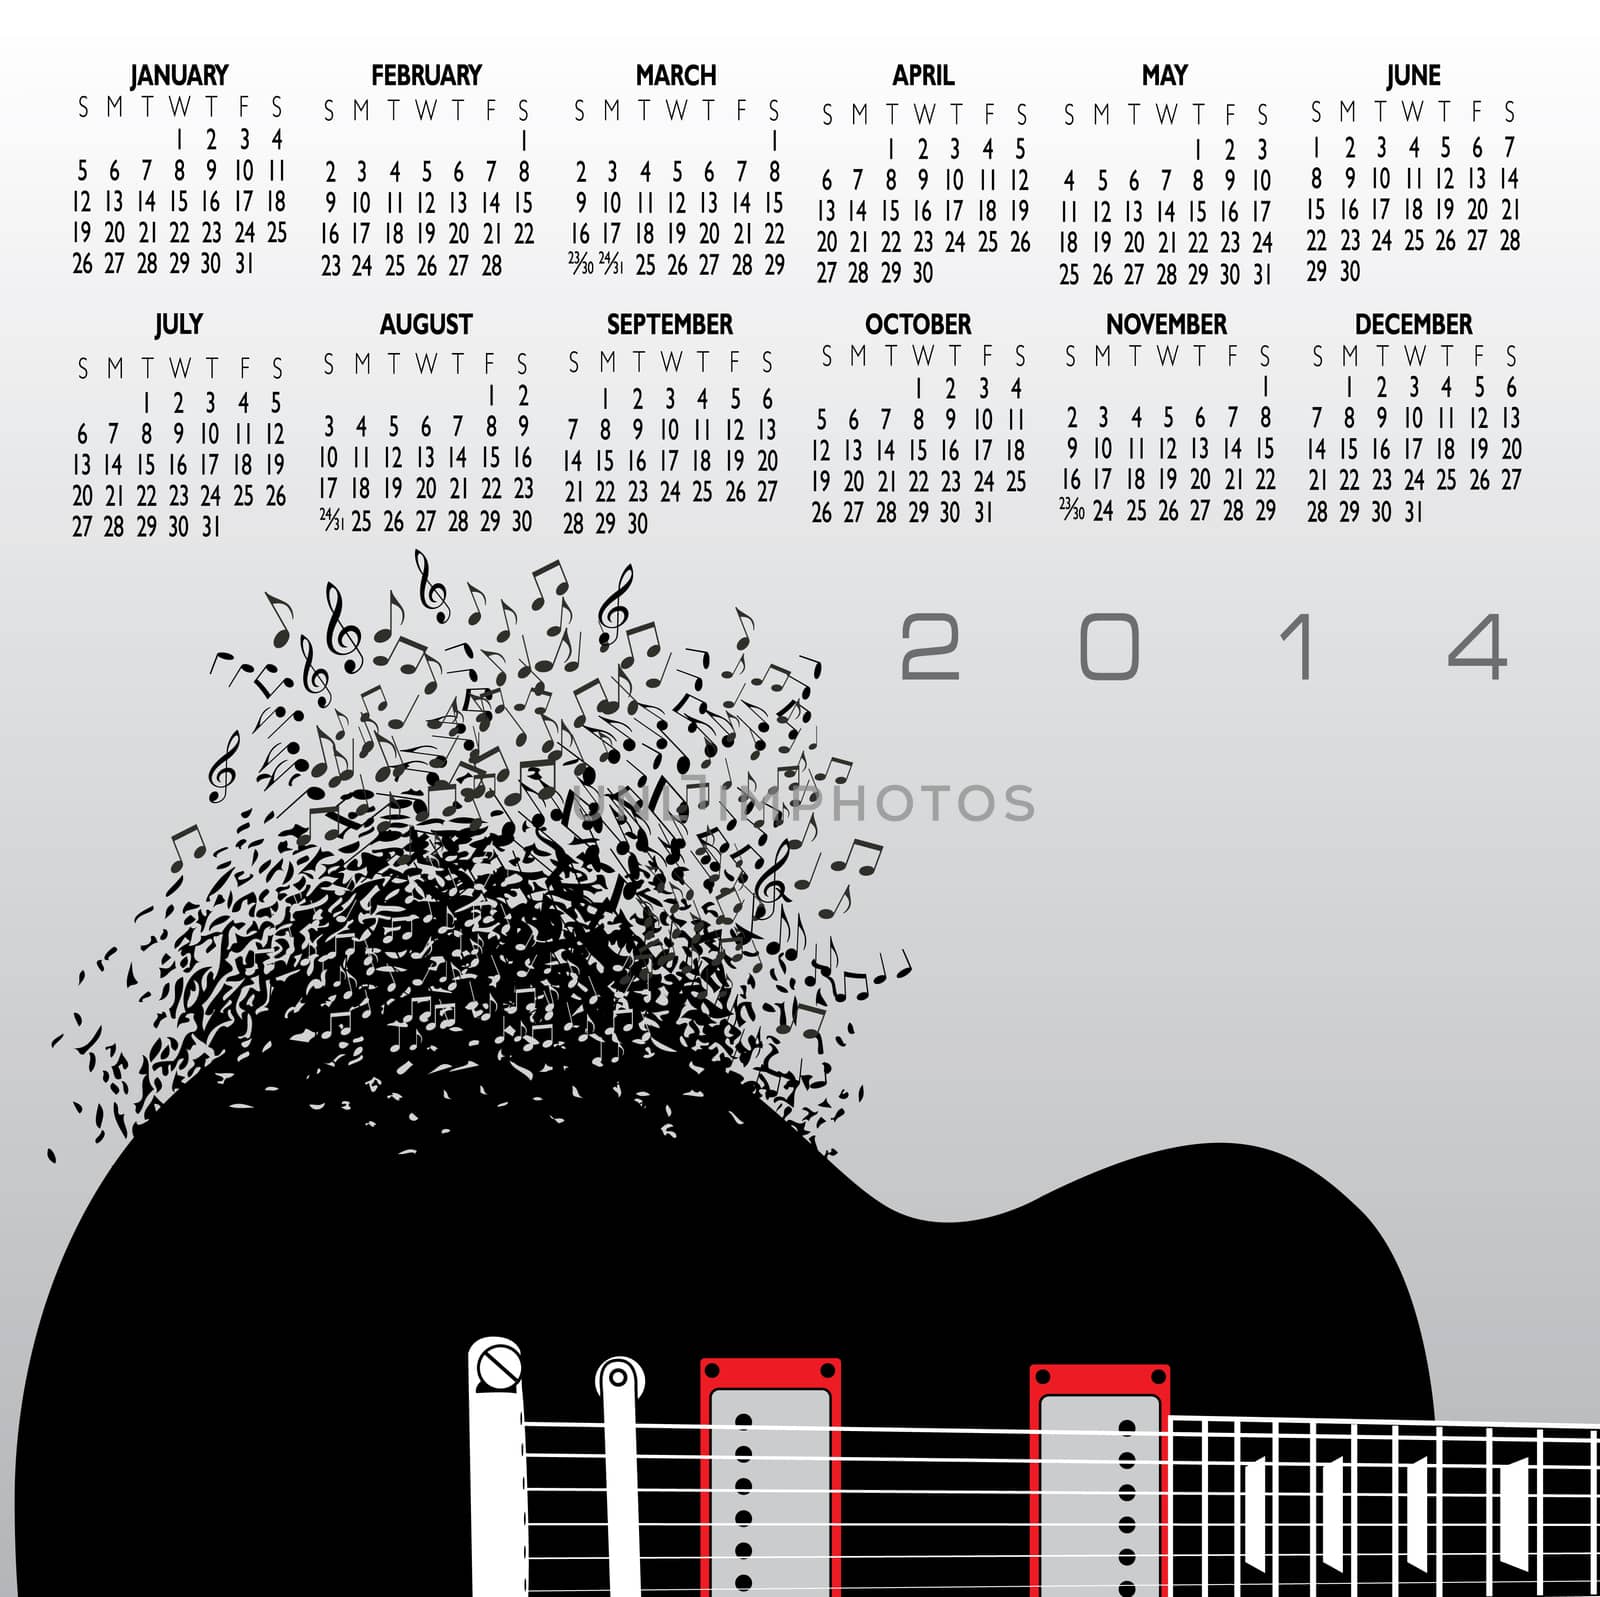 2014 Guitar Creative Calendar by mike301